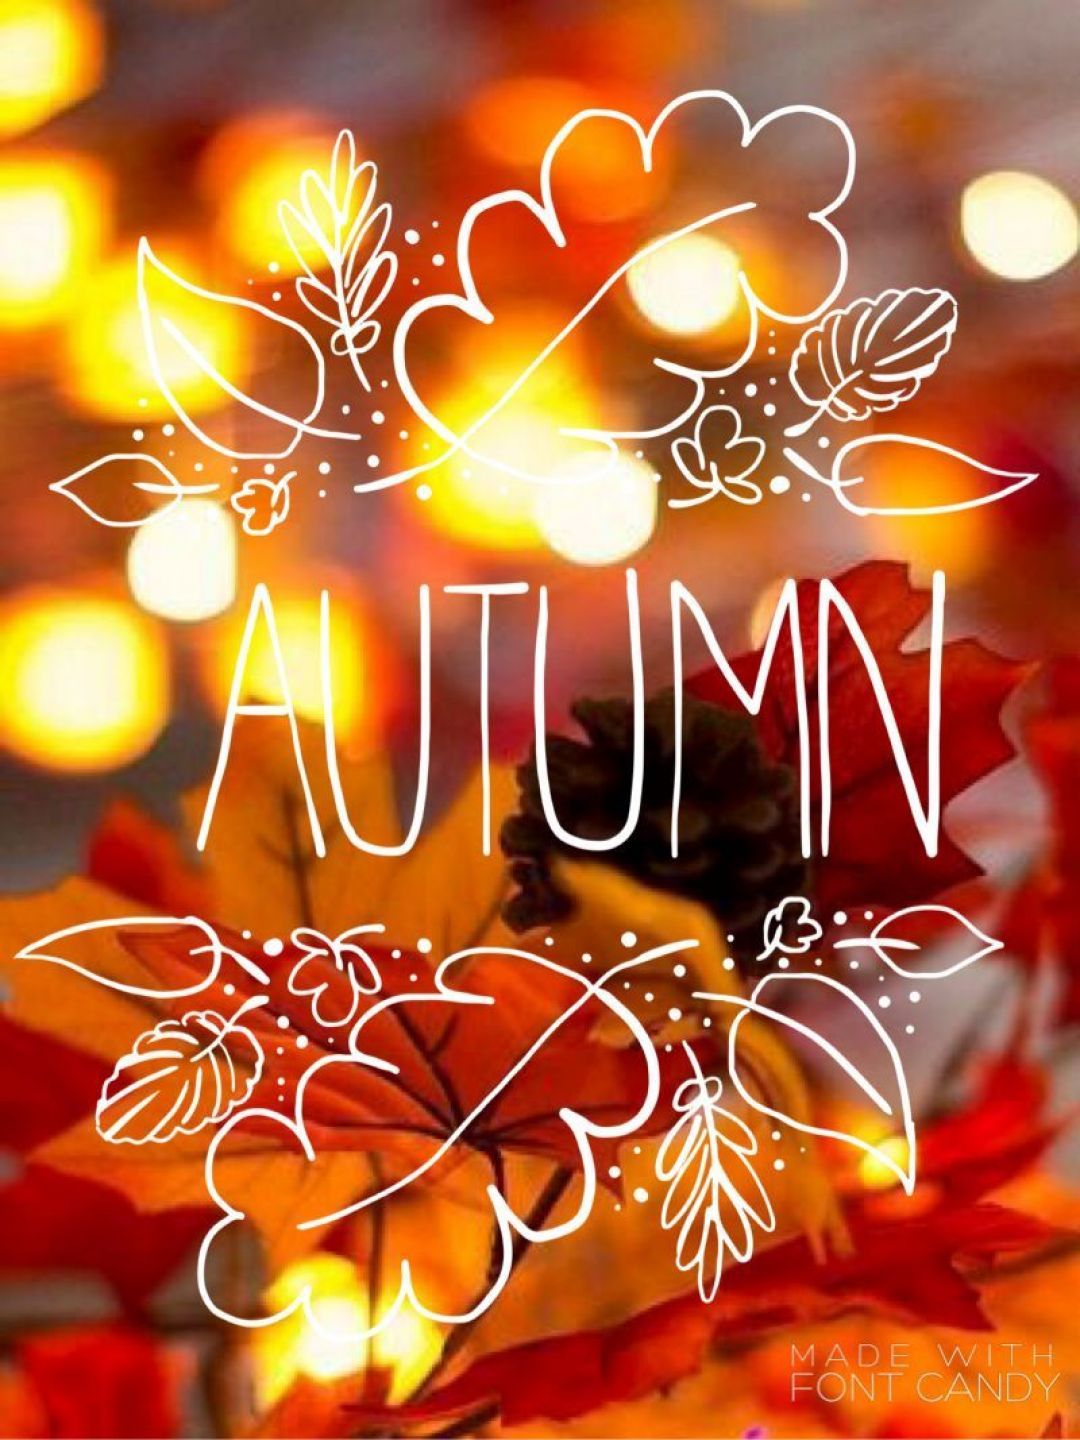 Hello Autumn Aesthetic HD Wallpaper (Desktop Background / Android / iPhone) (1080p, 4k) (1080x1440) (2020)